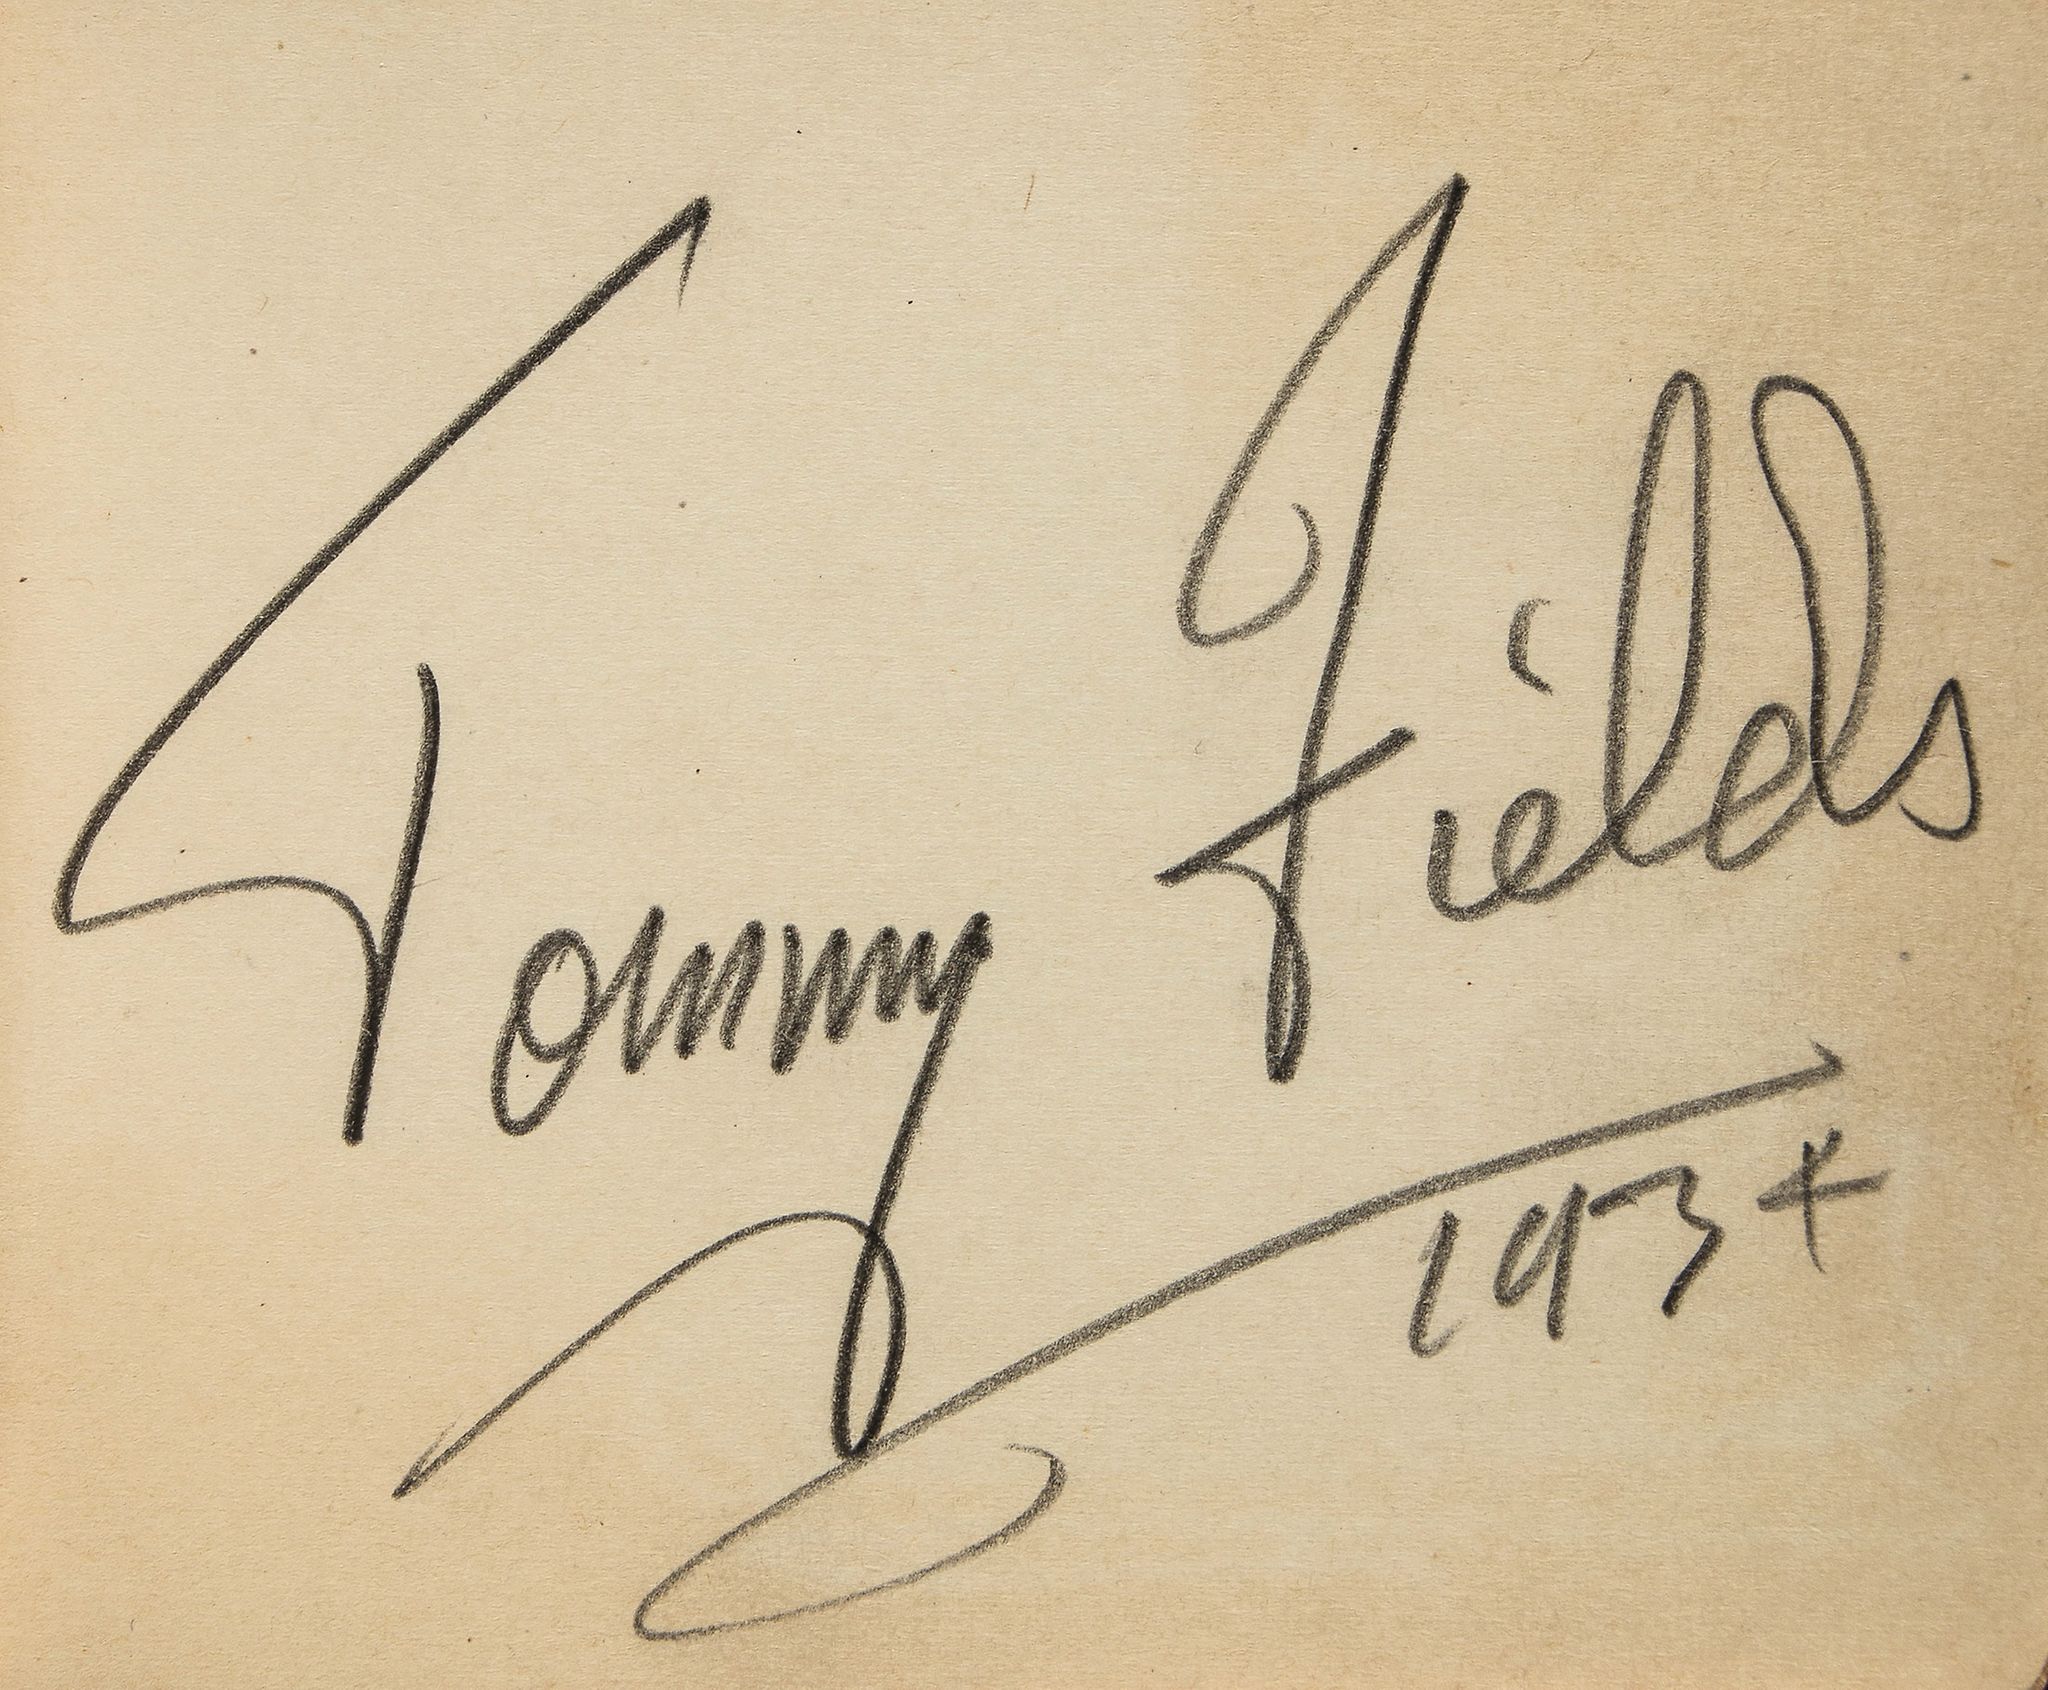 AUTOGRAPH ALBUM - INCL. LAUREL & HARDY - Autograph album including signatures by Stan Laurel and - Image 3 of 3